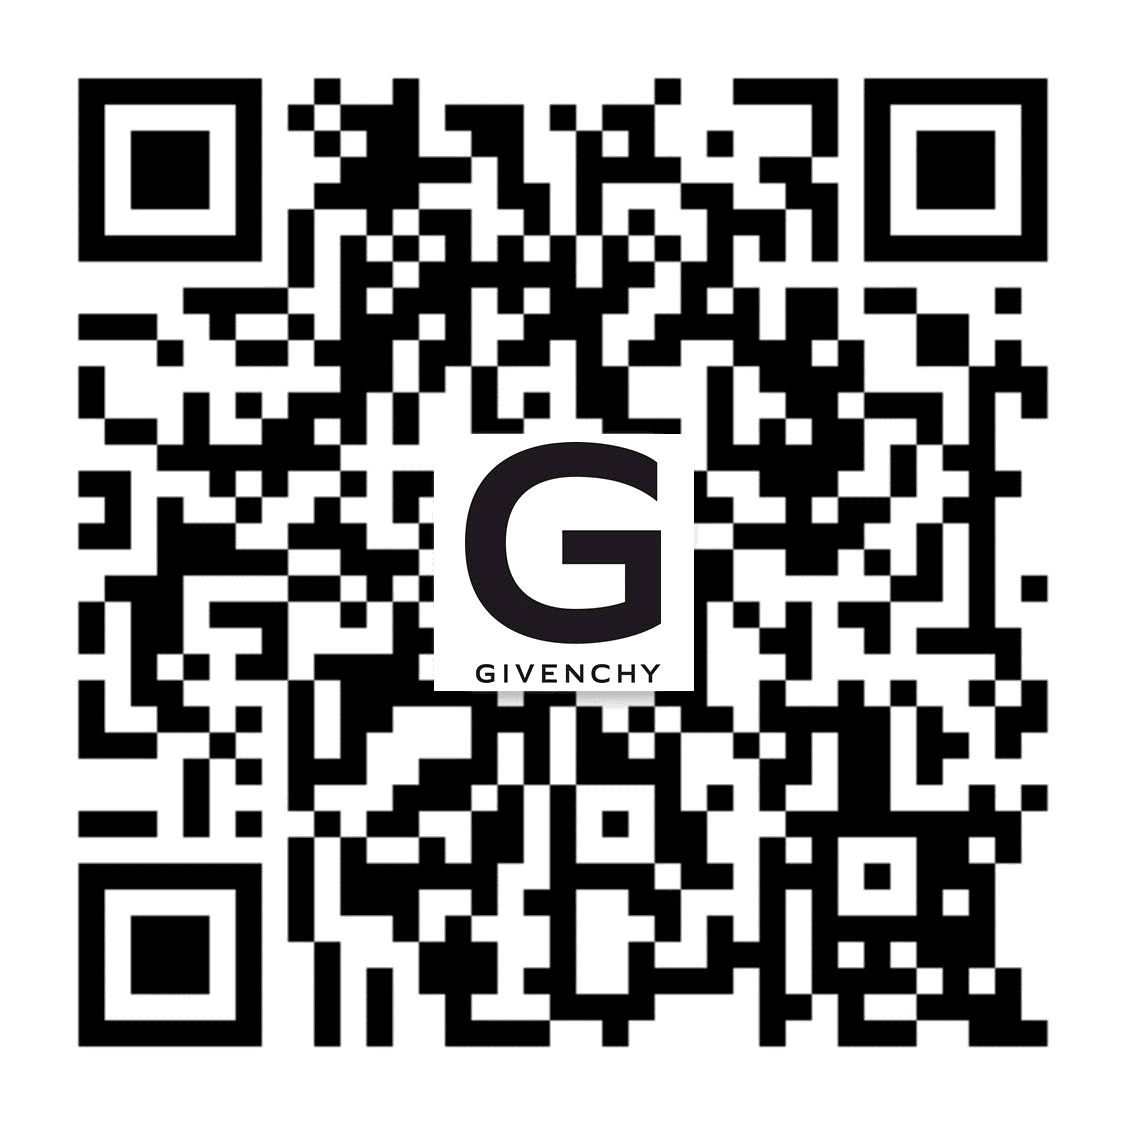 Perceptie Onverschilligheid Station G Givenchy - Official Site